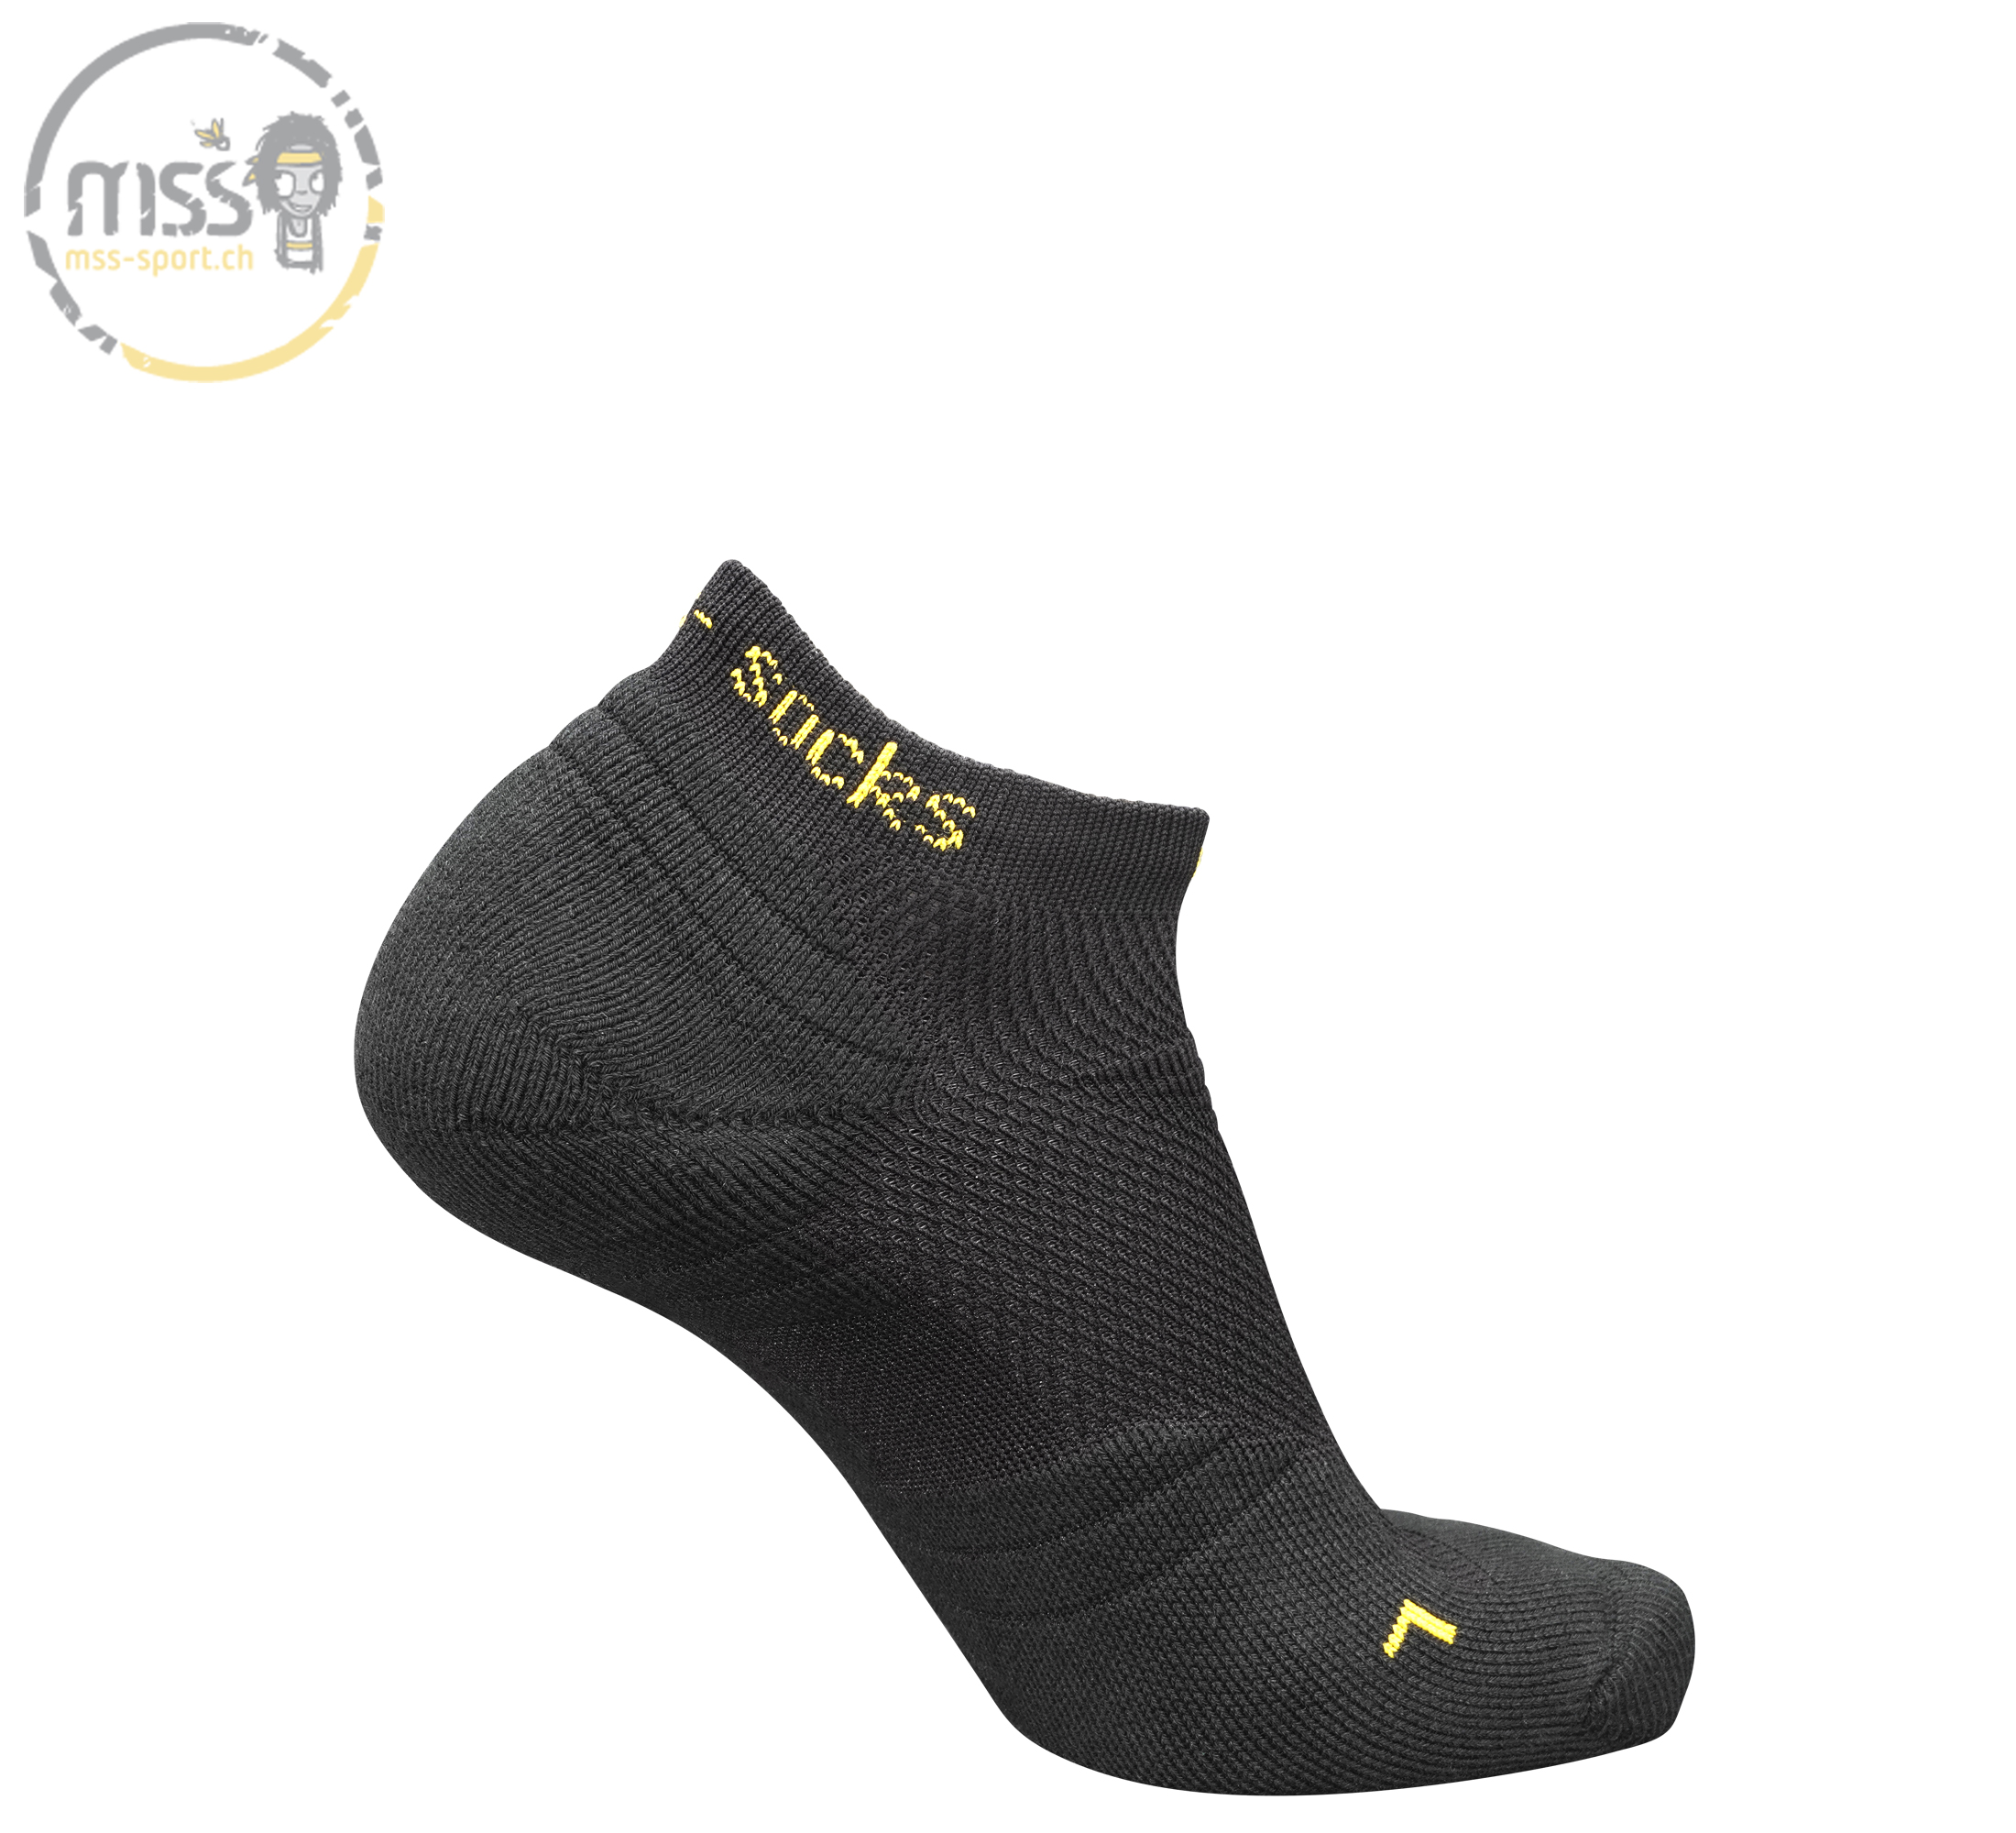 mss-socks Smash 5300 low Men black